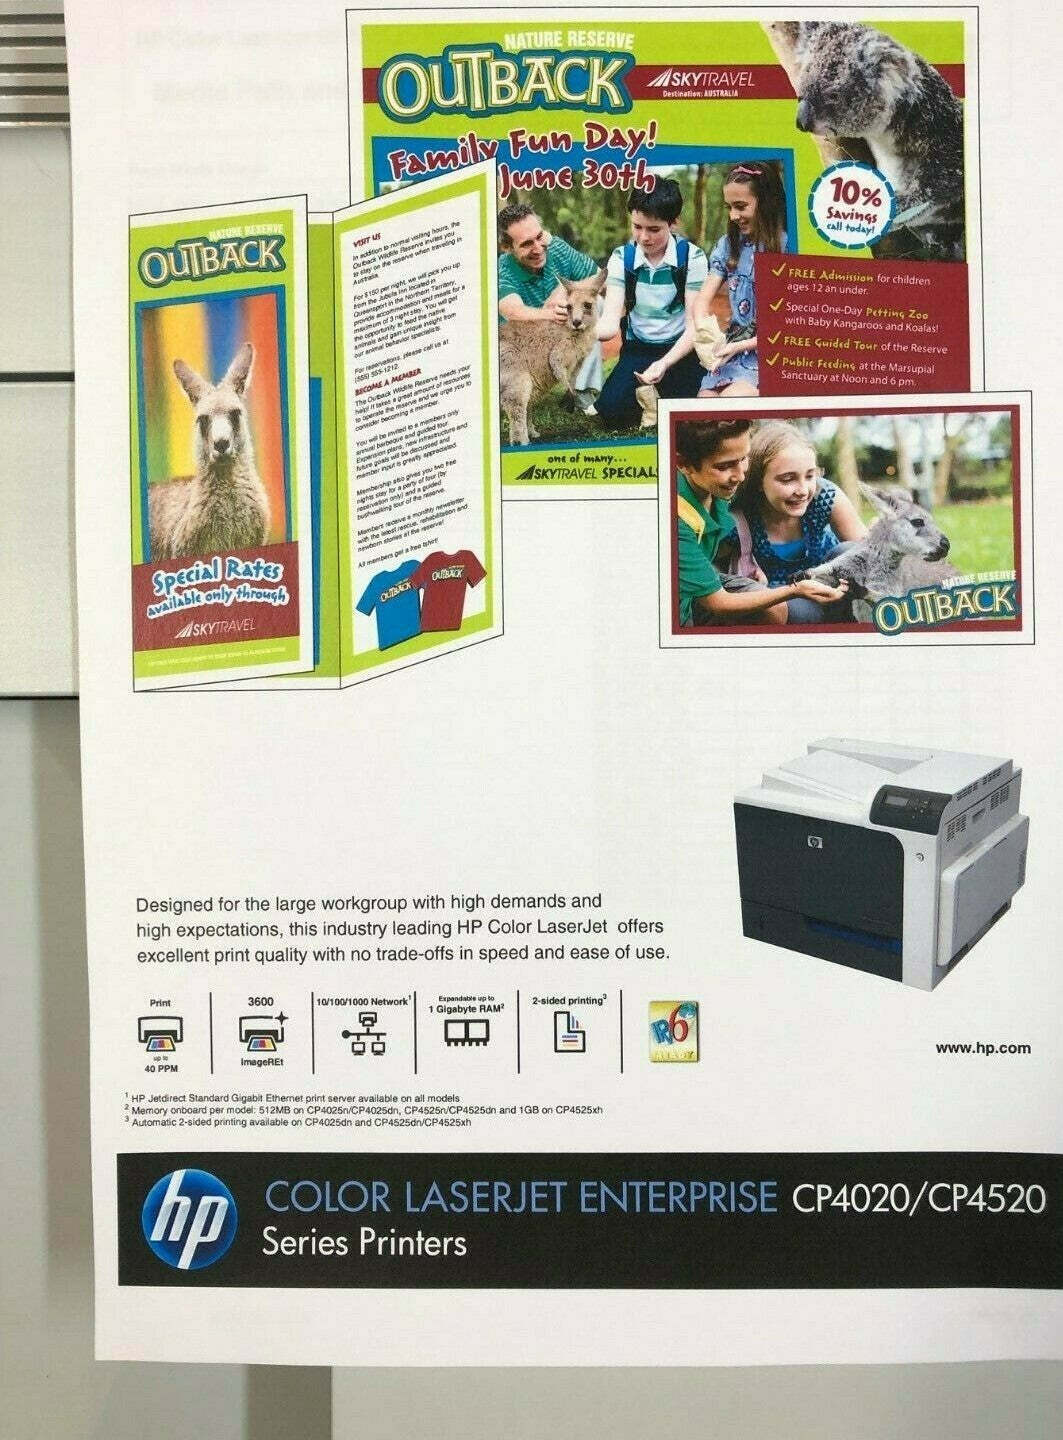 HP LaserJet CP4025dn Workgroup Laser Printer 84K